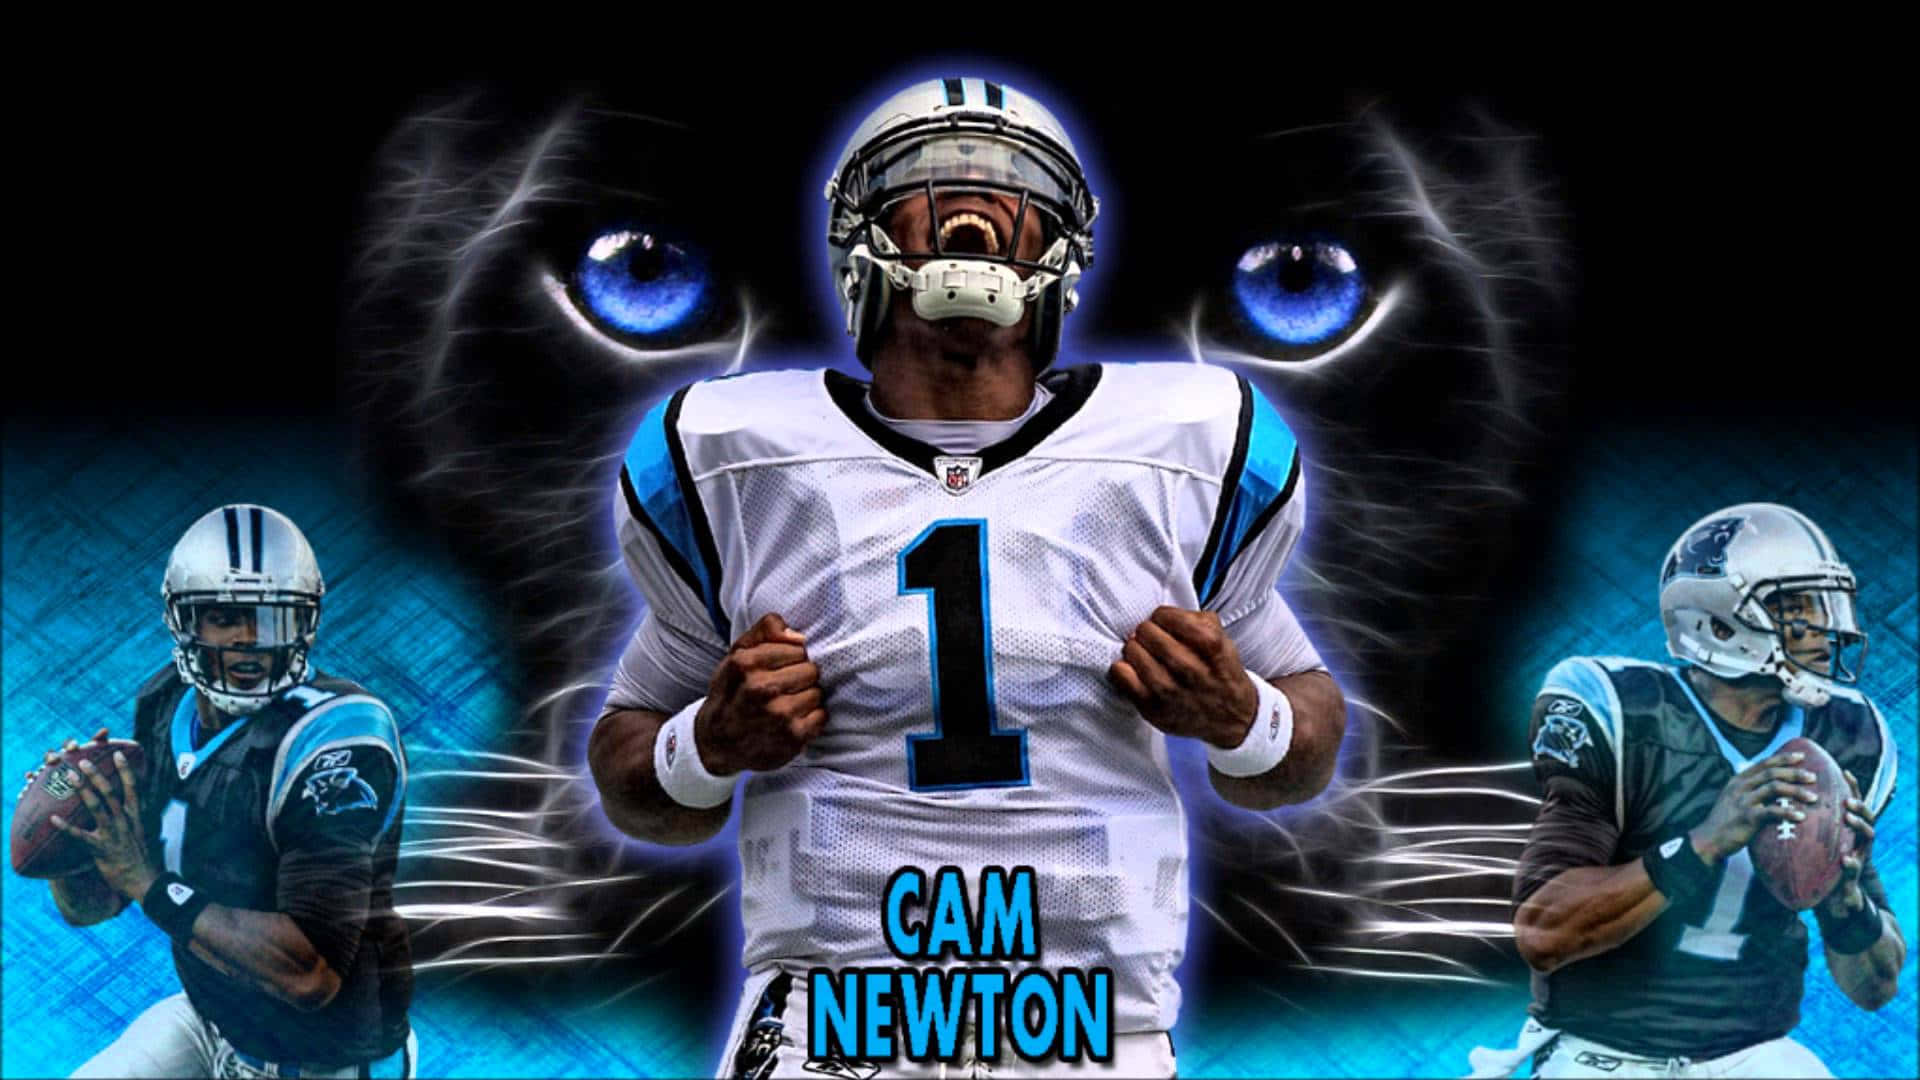 Cam Newton 1920 X 1080 Wallpaper